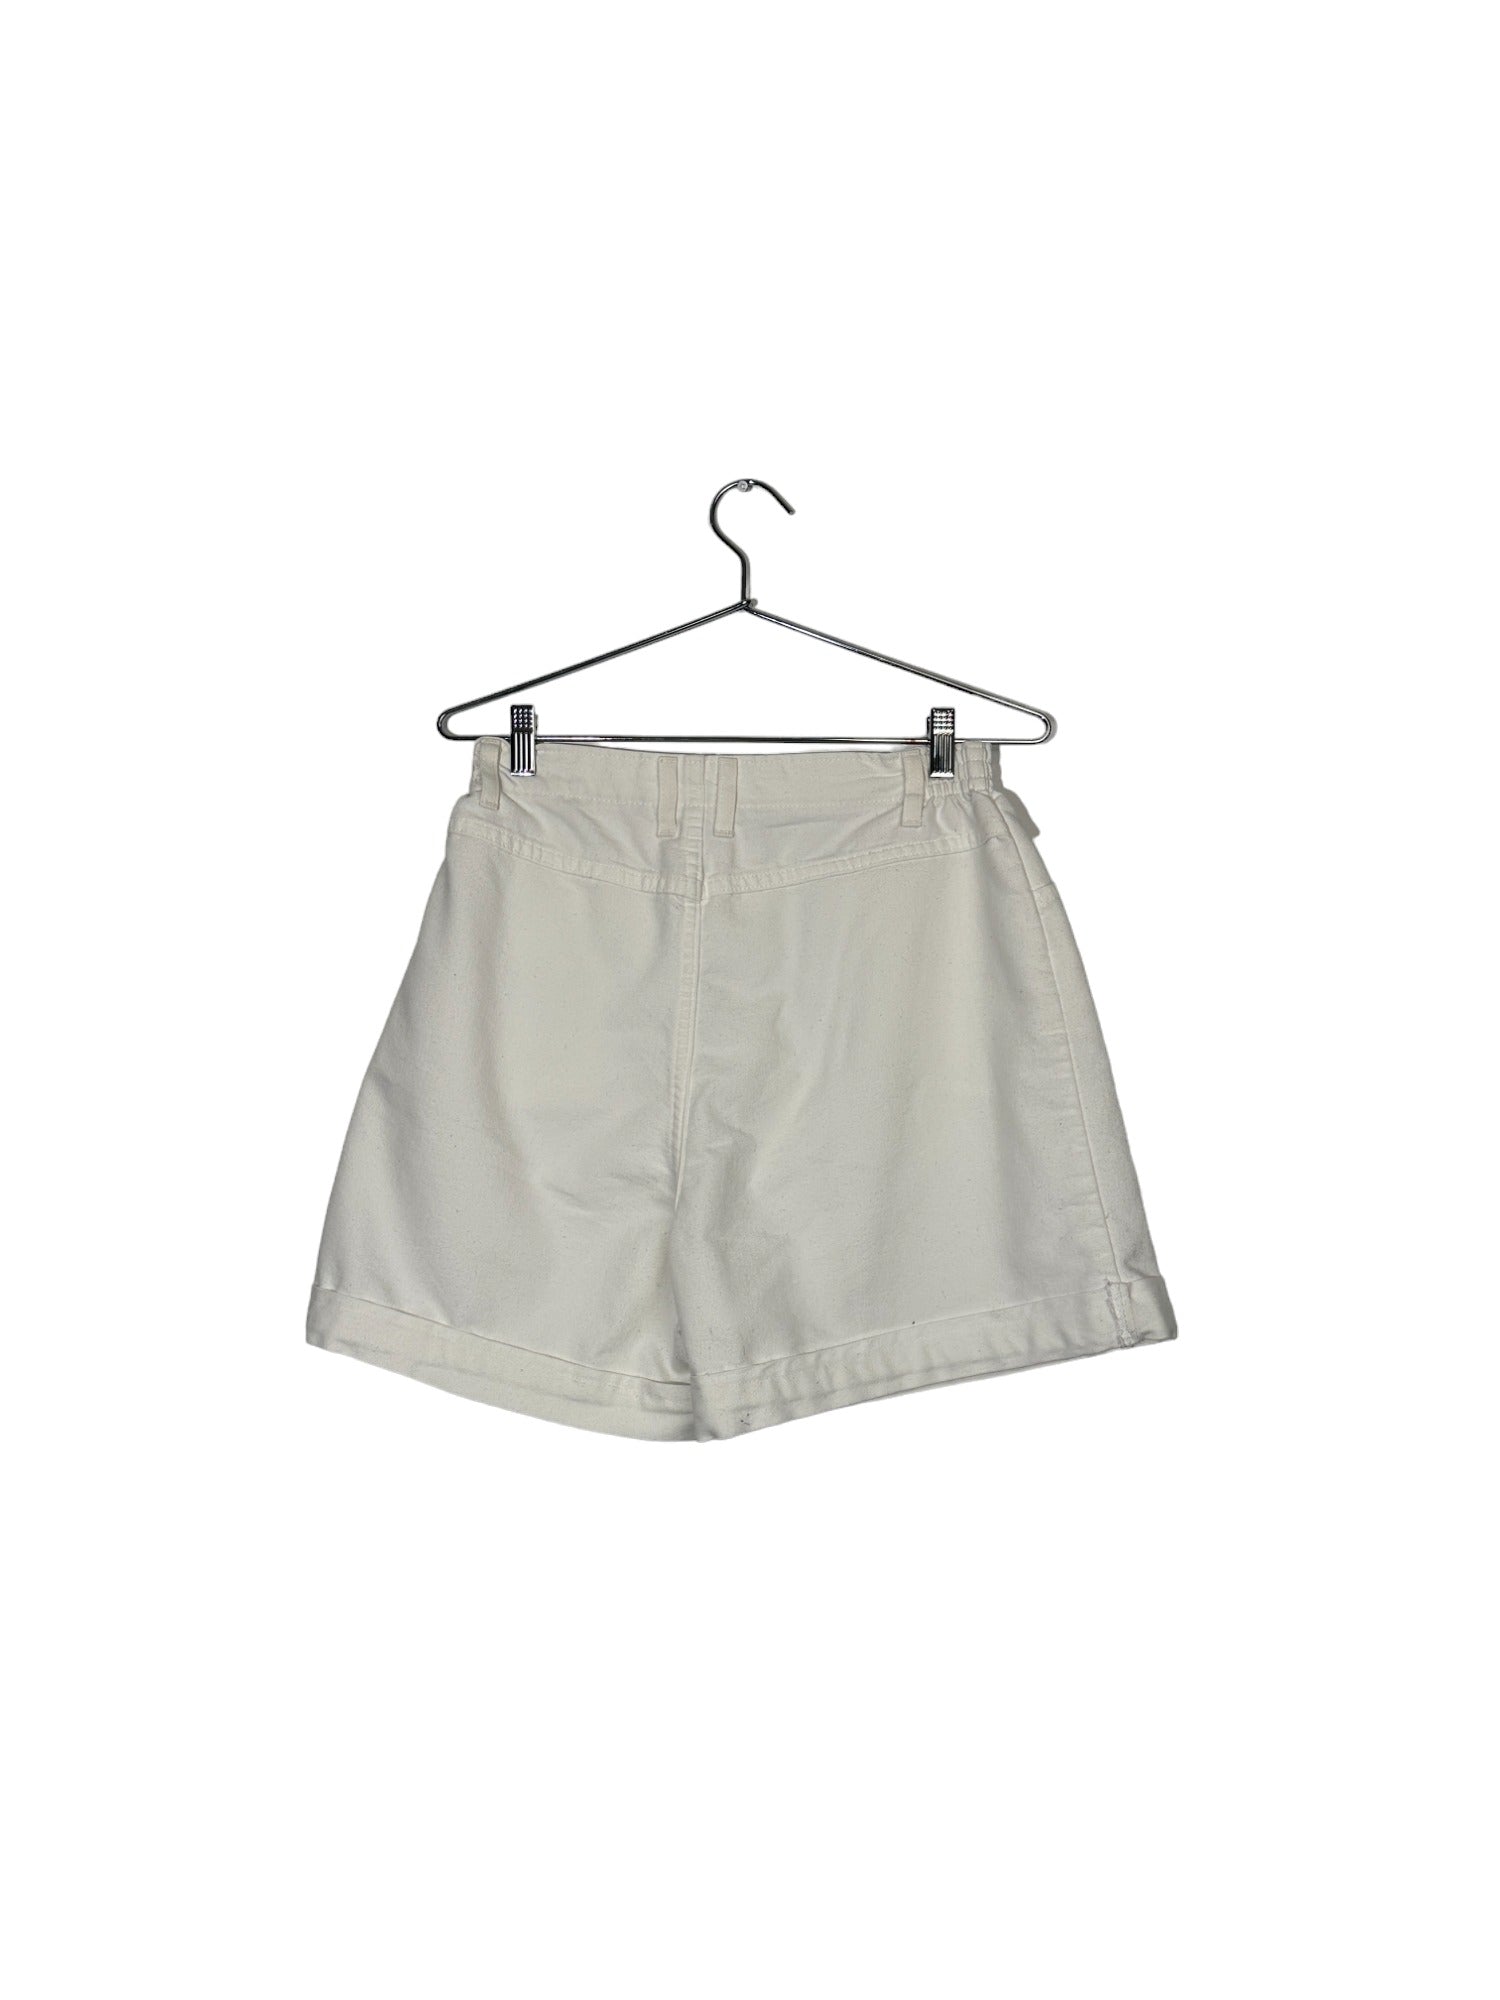 Lee 1889 White Denim Shorts